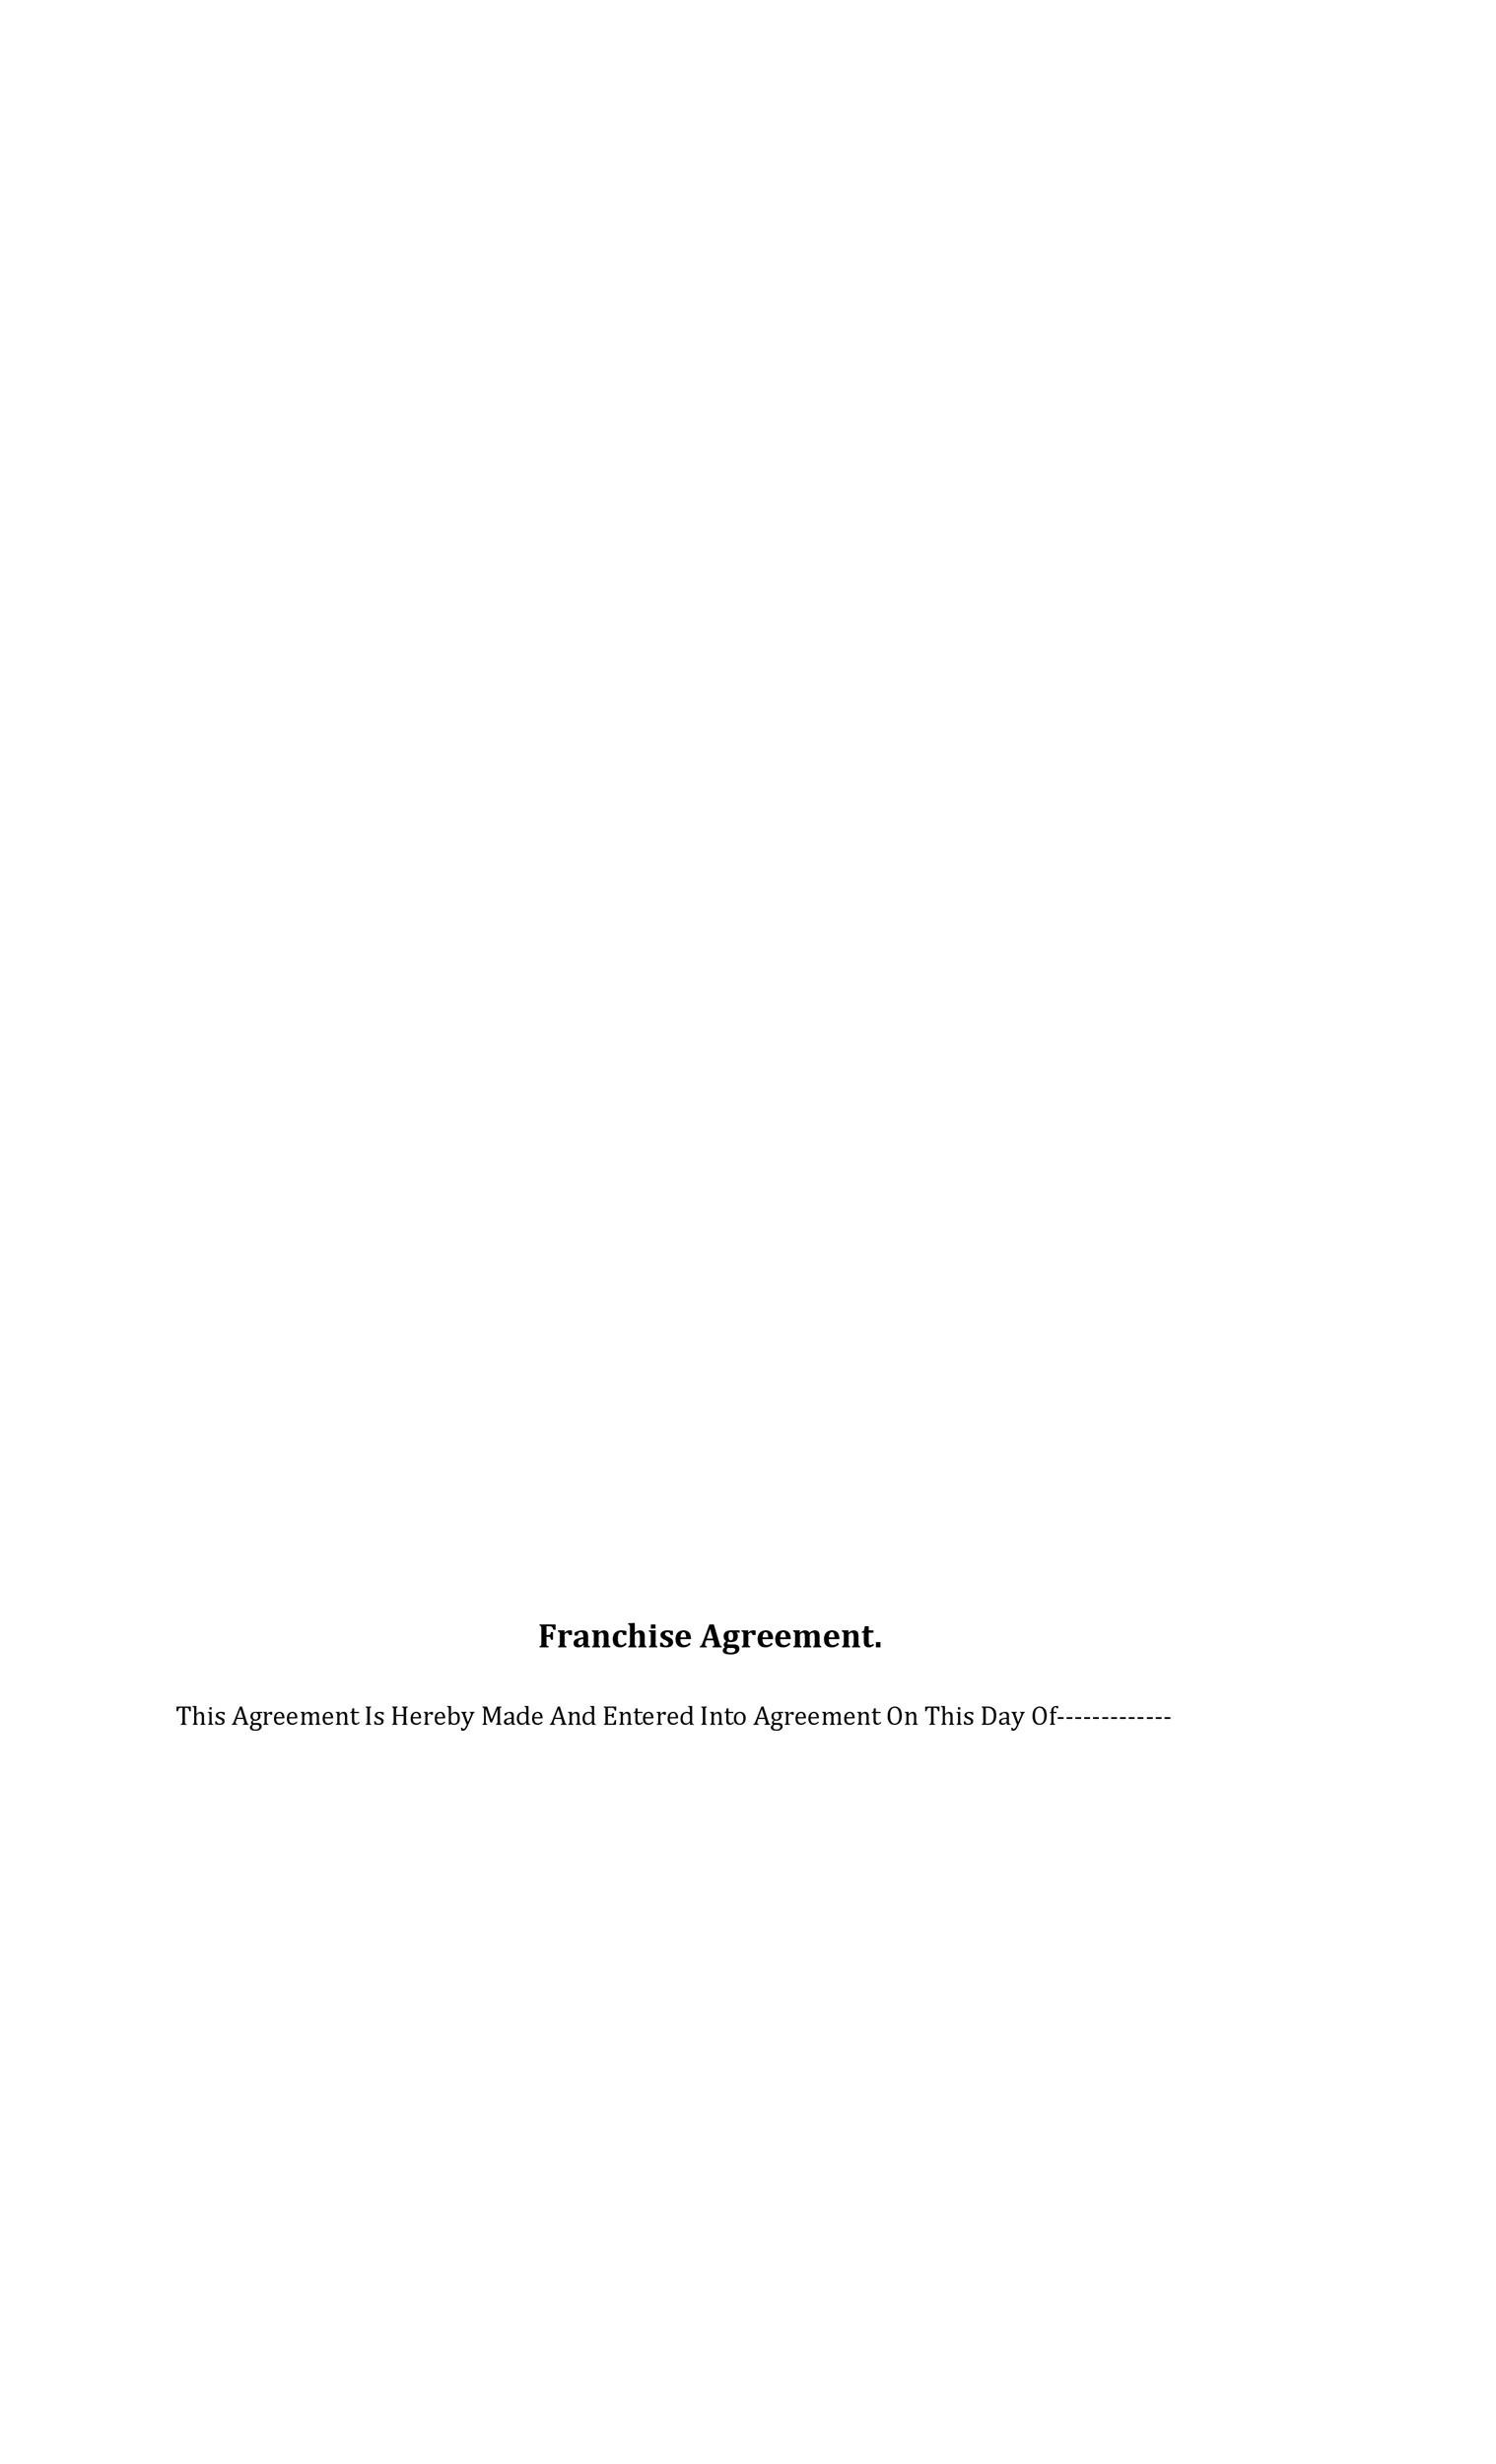 Free franchise agreement 36